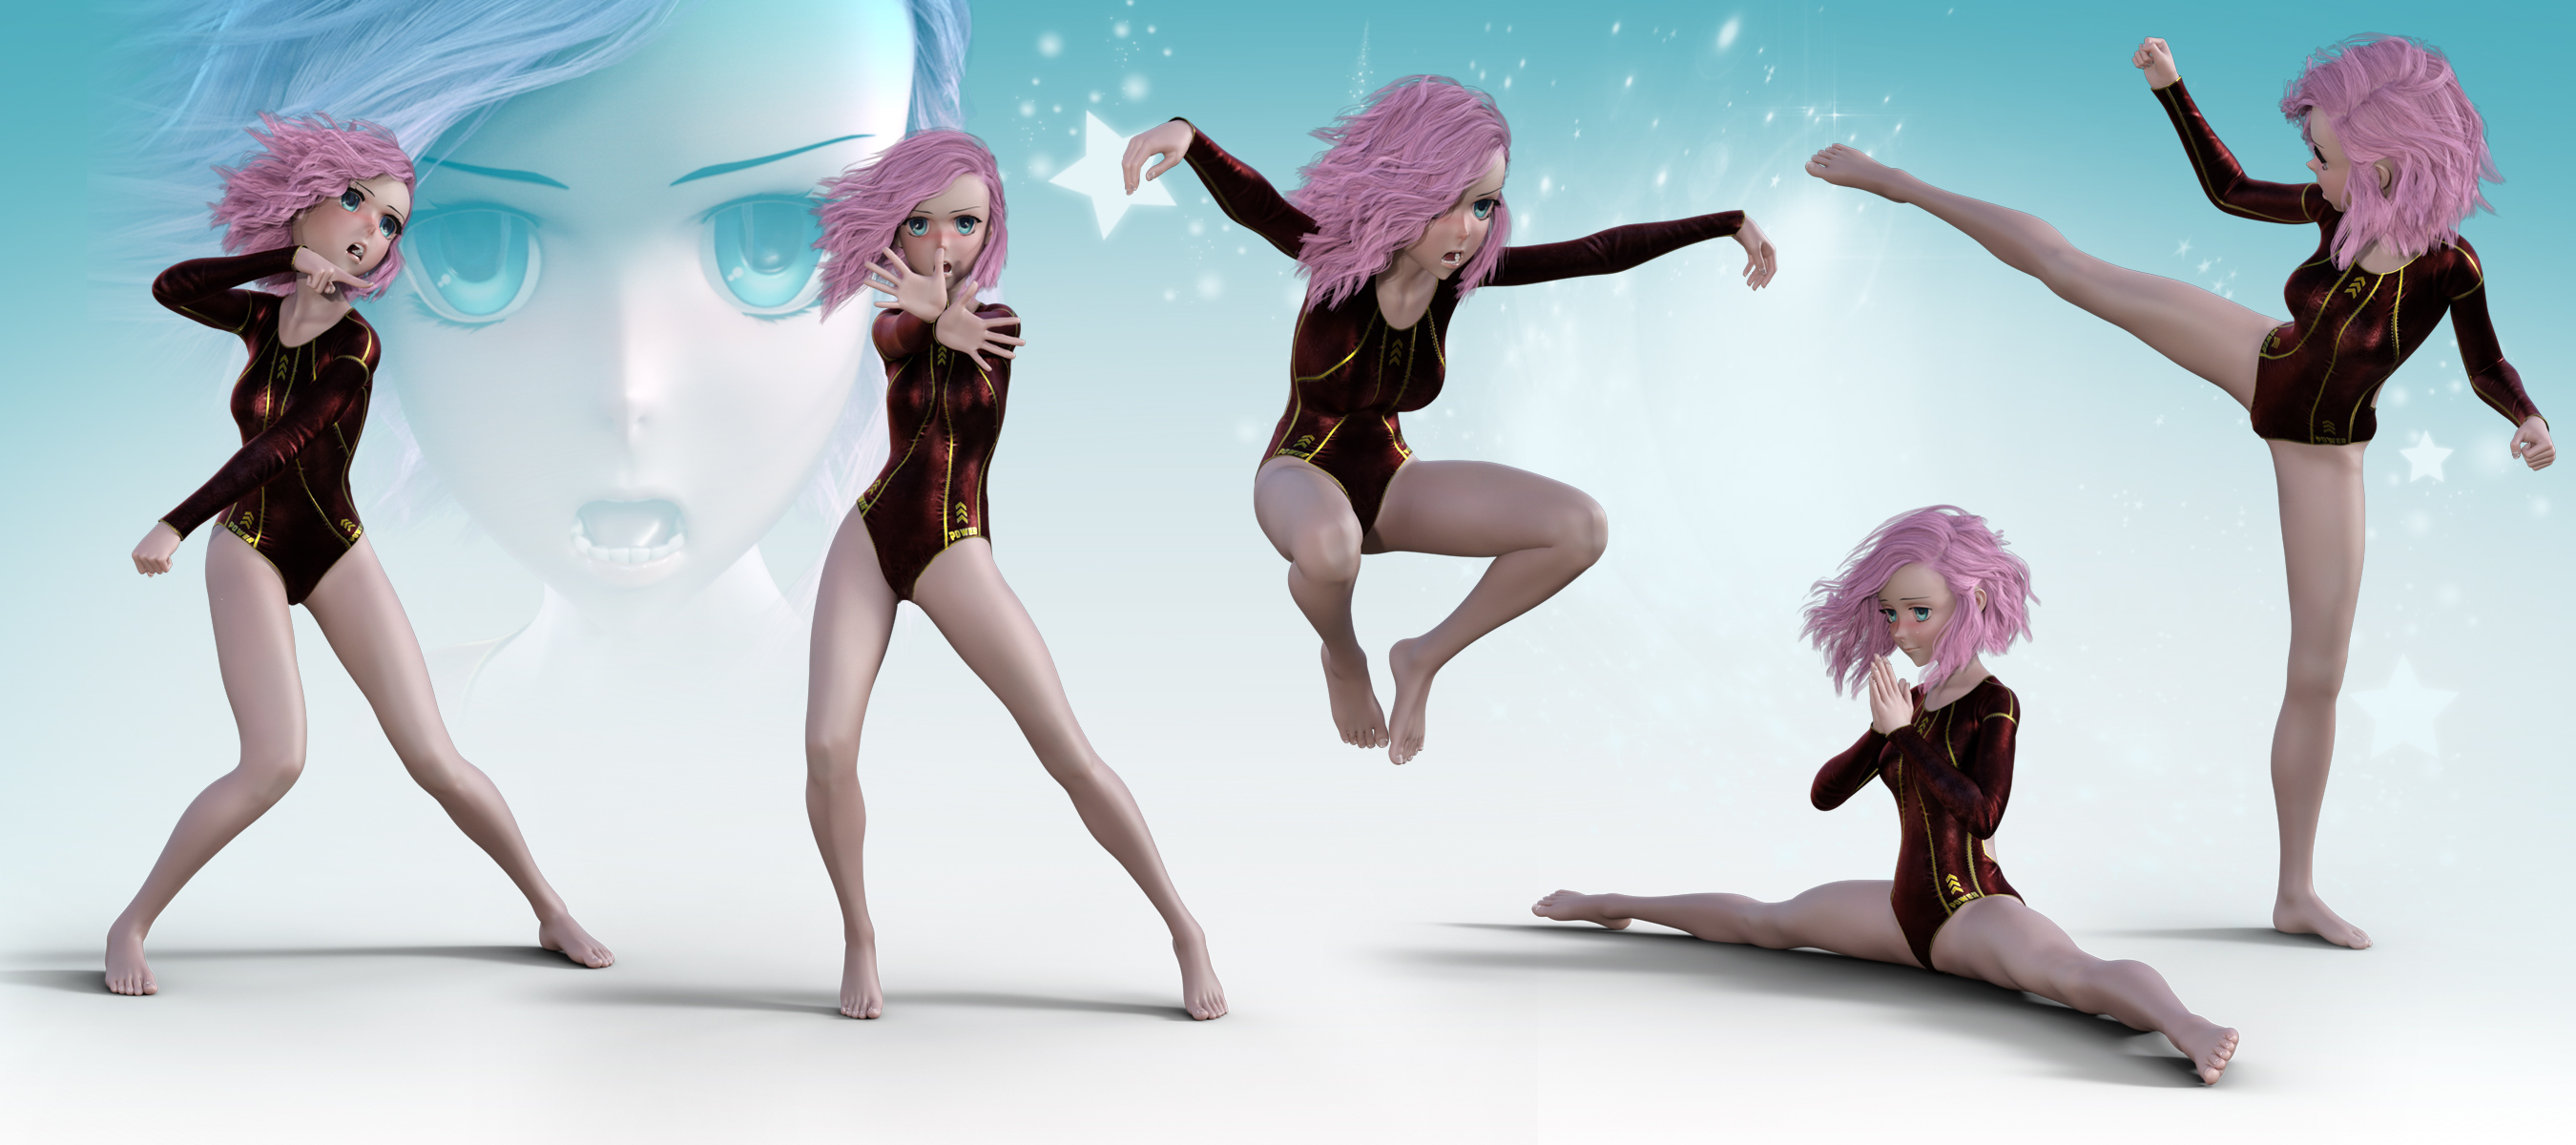 Z Ninja Warrior - Poses & Expressions for Sakura 8 and Genesis 8 Female by: Zeddicuss, 3D Models by Daz 3D